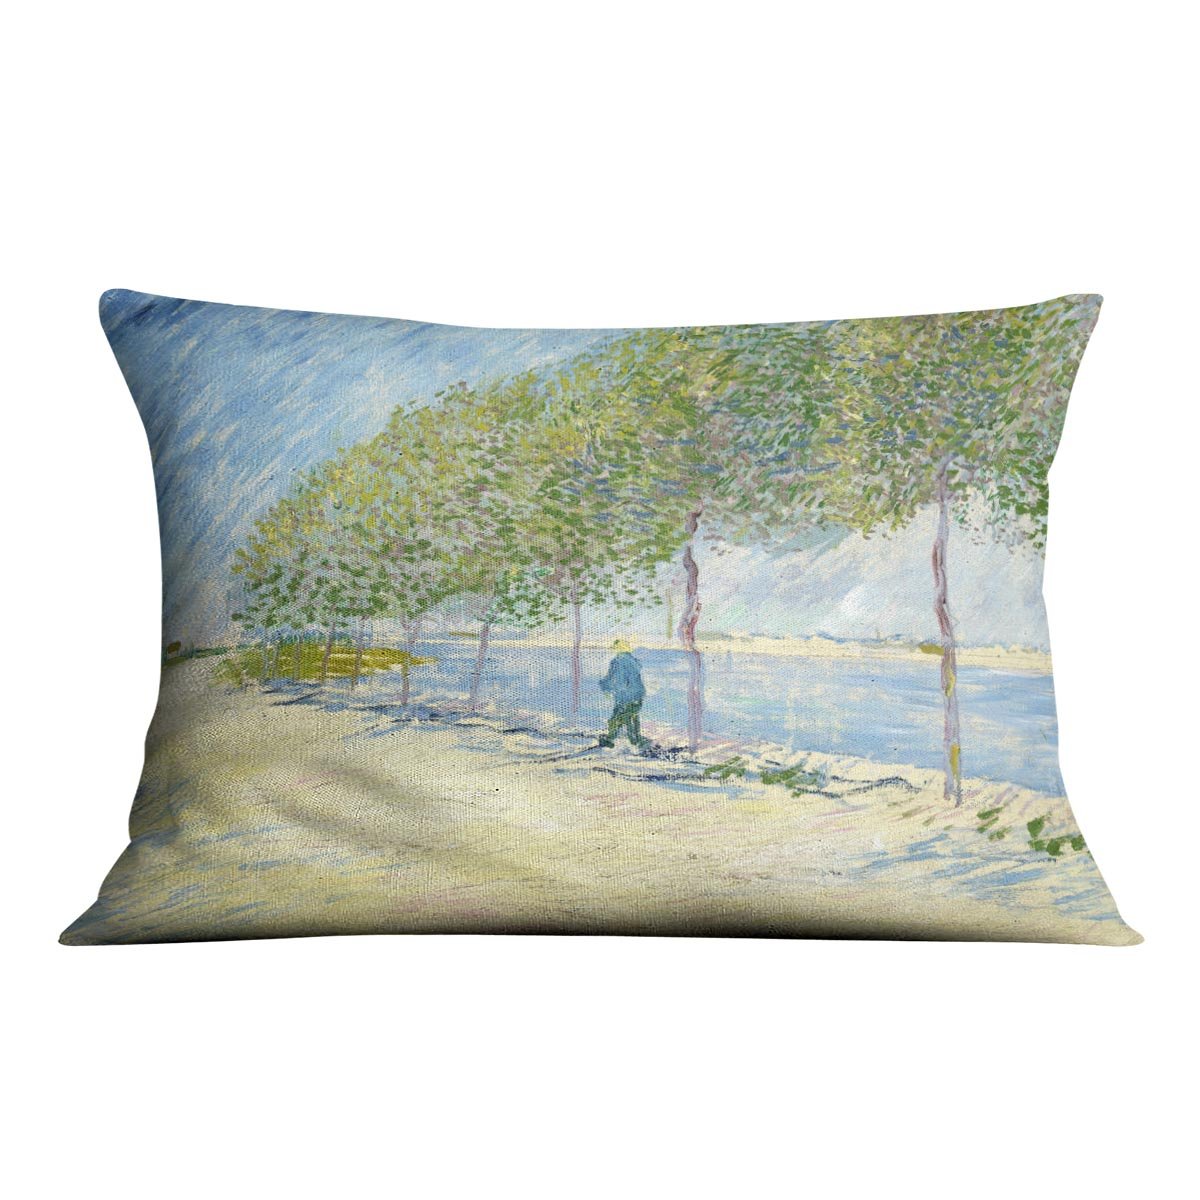 Along the Seine by Van Gogh Throw Pillow